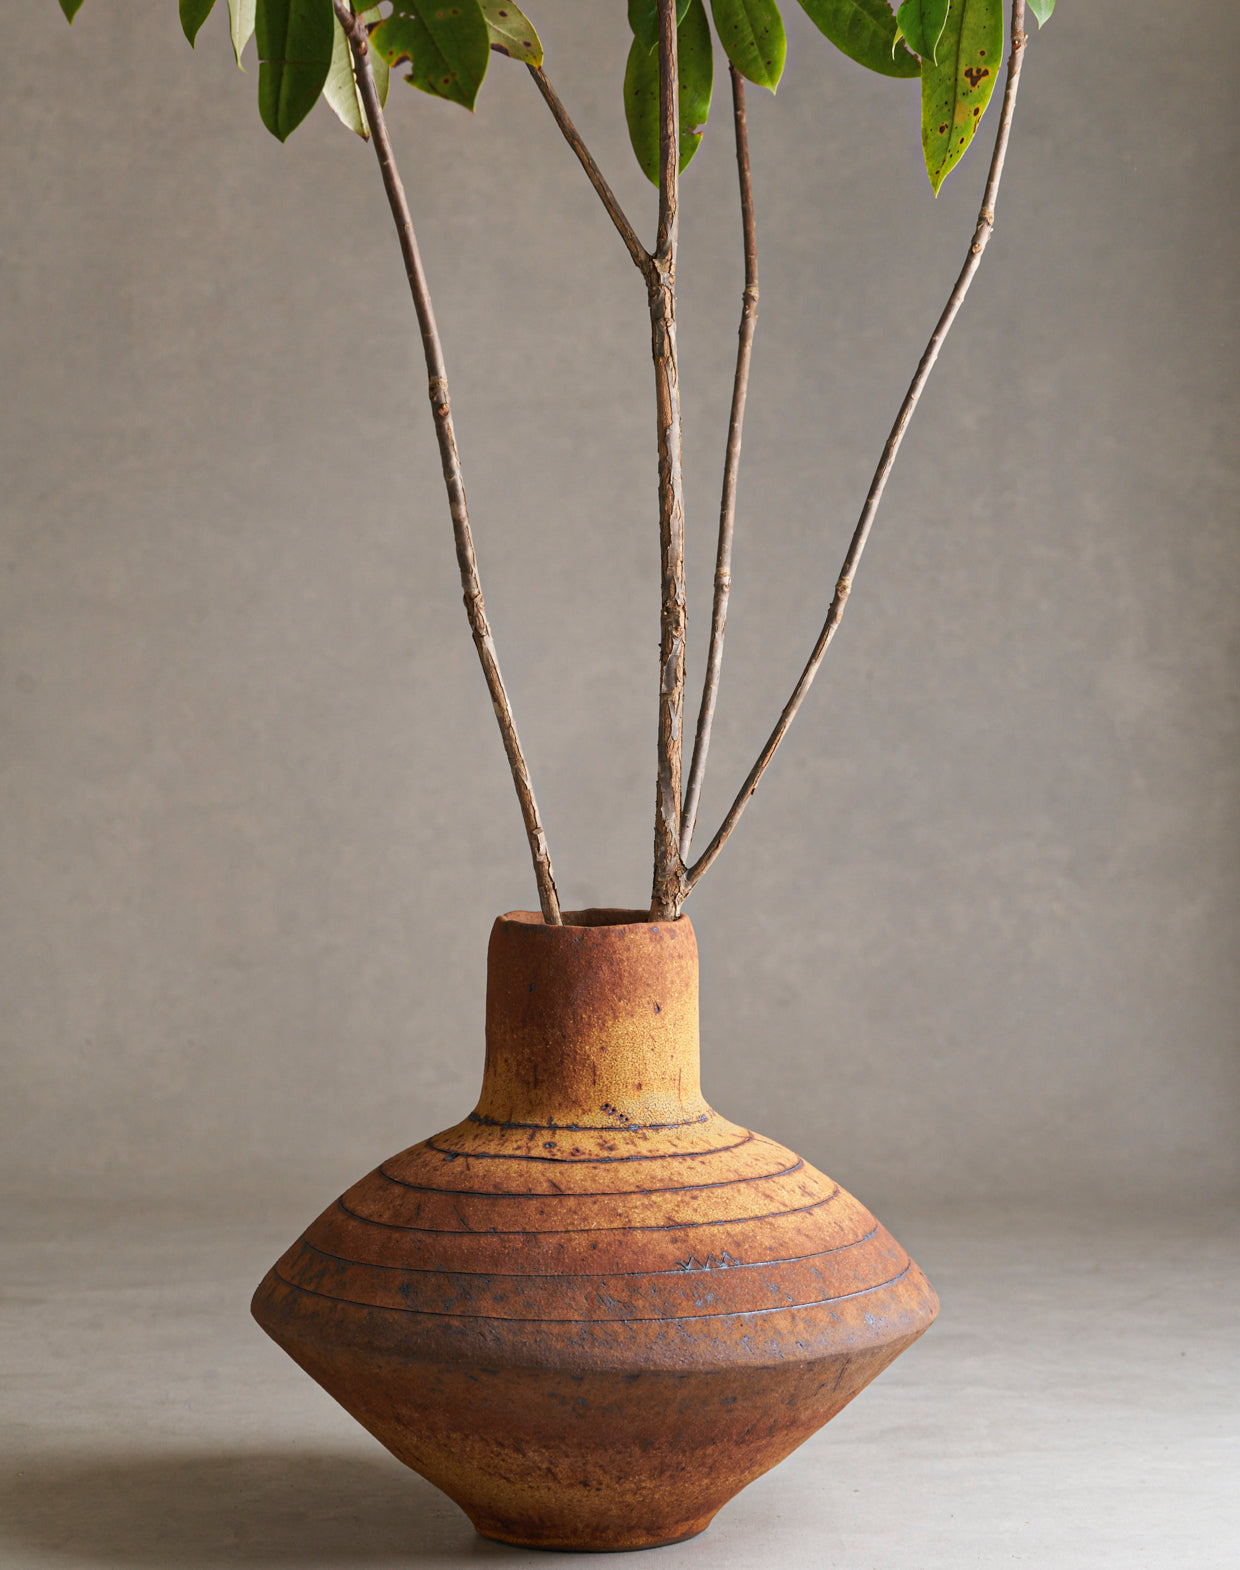 Rick Hintze Coiled Stoneware Vessel, "Untitled" No. 04